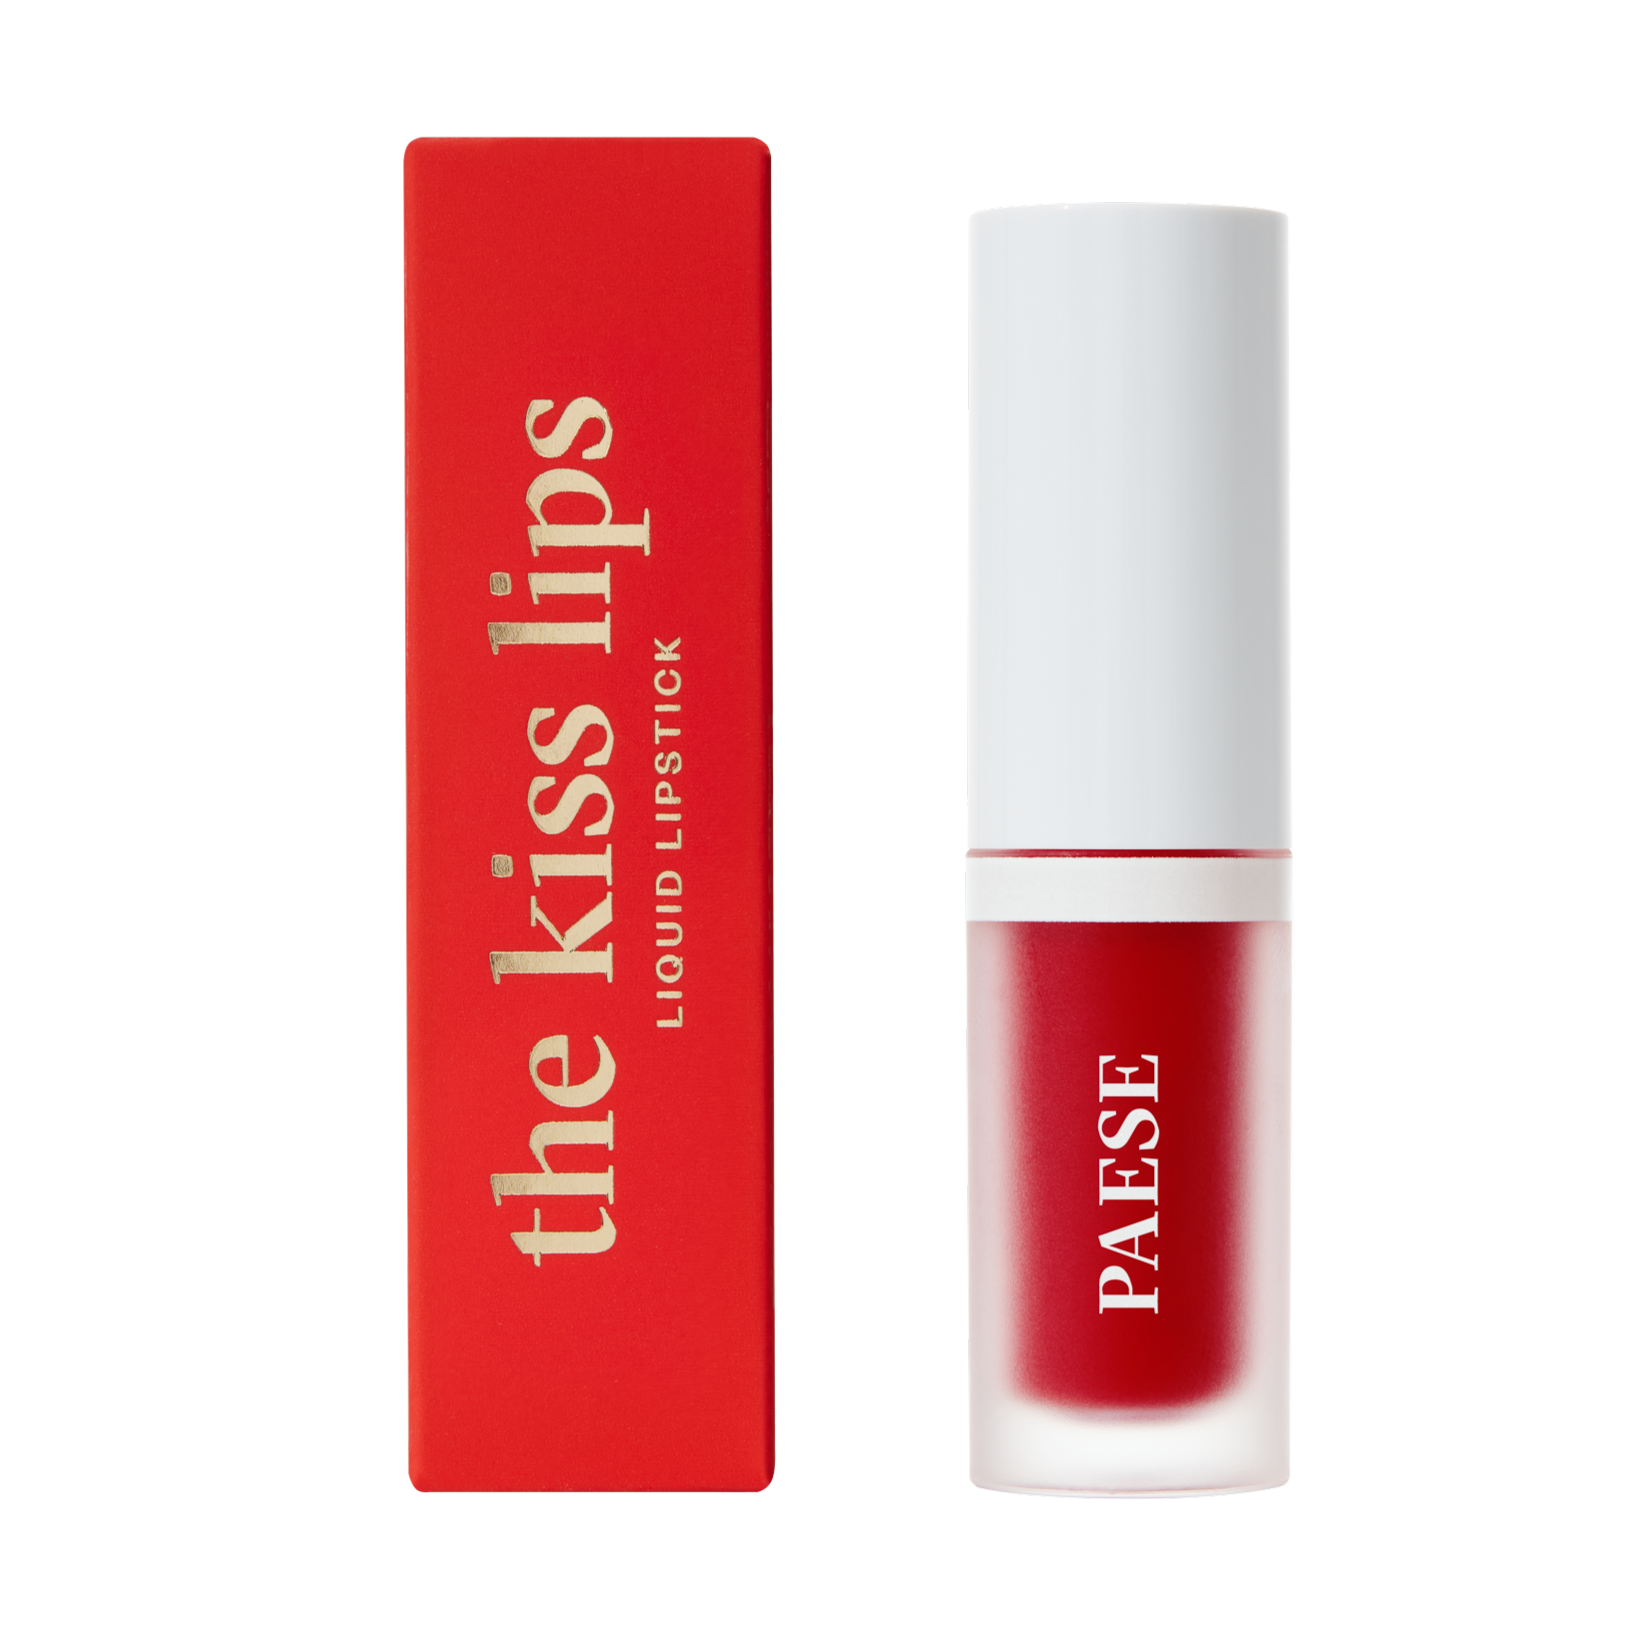 The Kiss Lips Liquid Lipstick